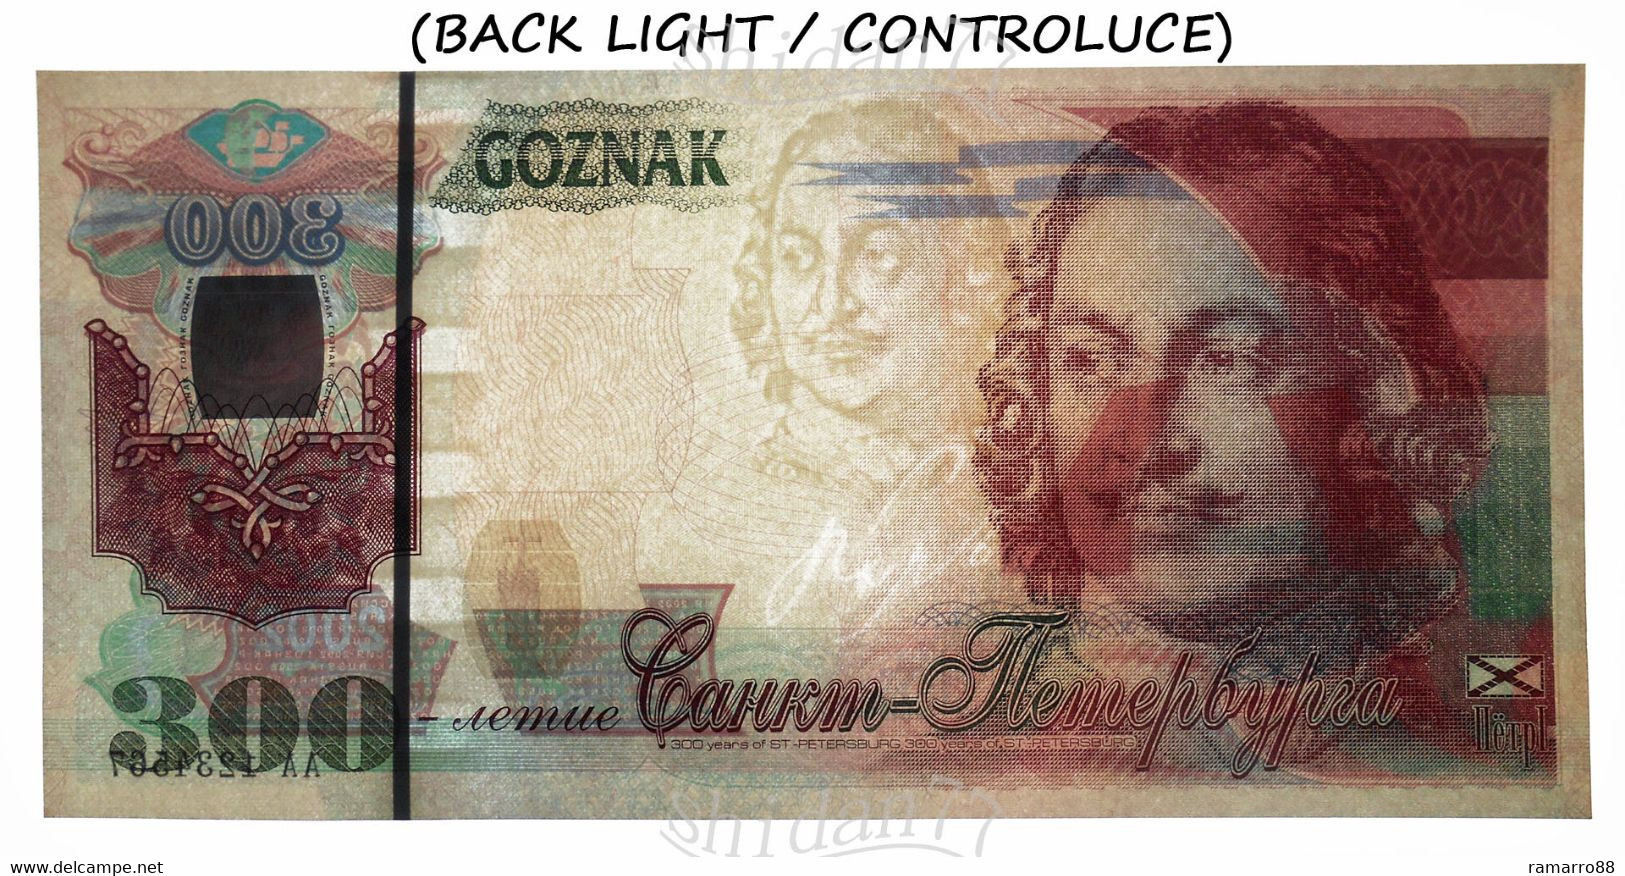 Goznak 300 Years Of St. Petersburg - Peter I The Great - Computer Engraved Type - 2002 Specimen Test Note Unc - Ficción & Especímenes